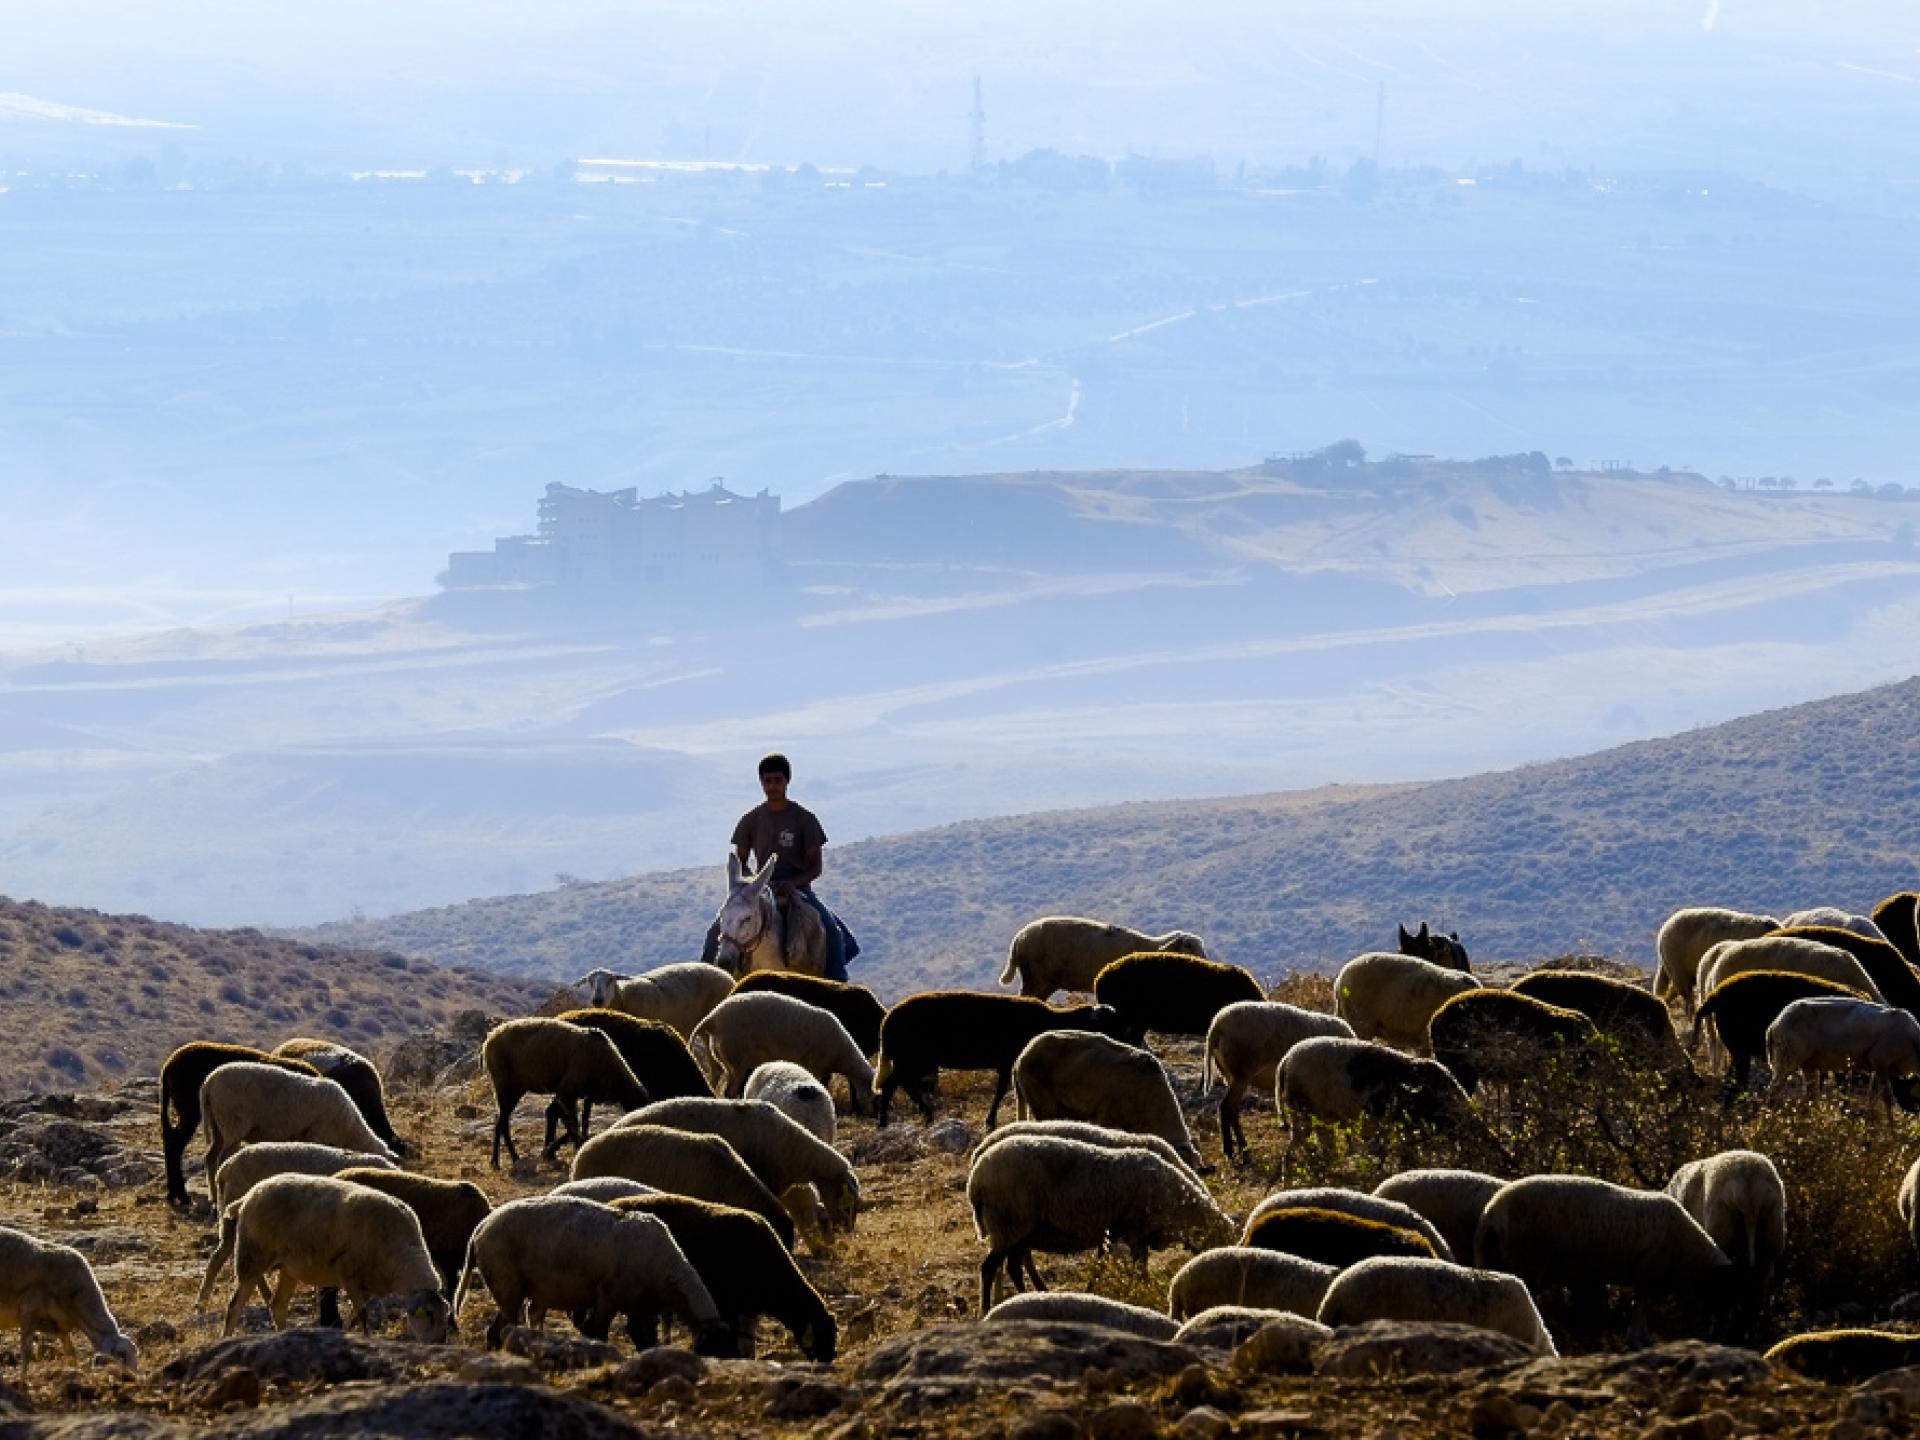 settler boy on donkey from Shirat HaAsabim herding sheep freely in the firing zone